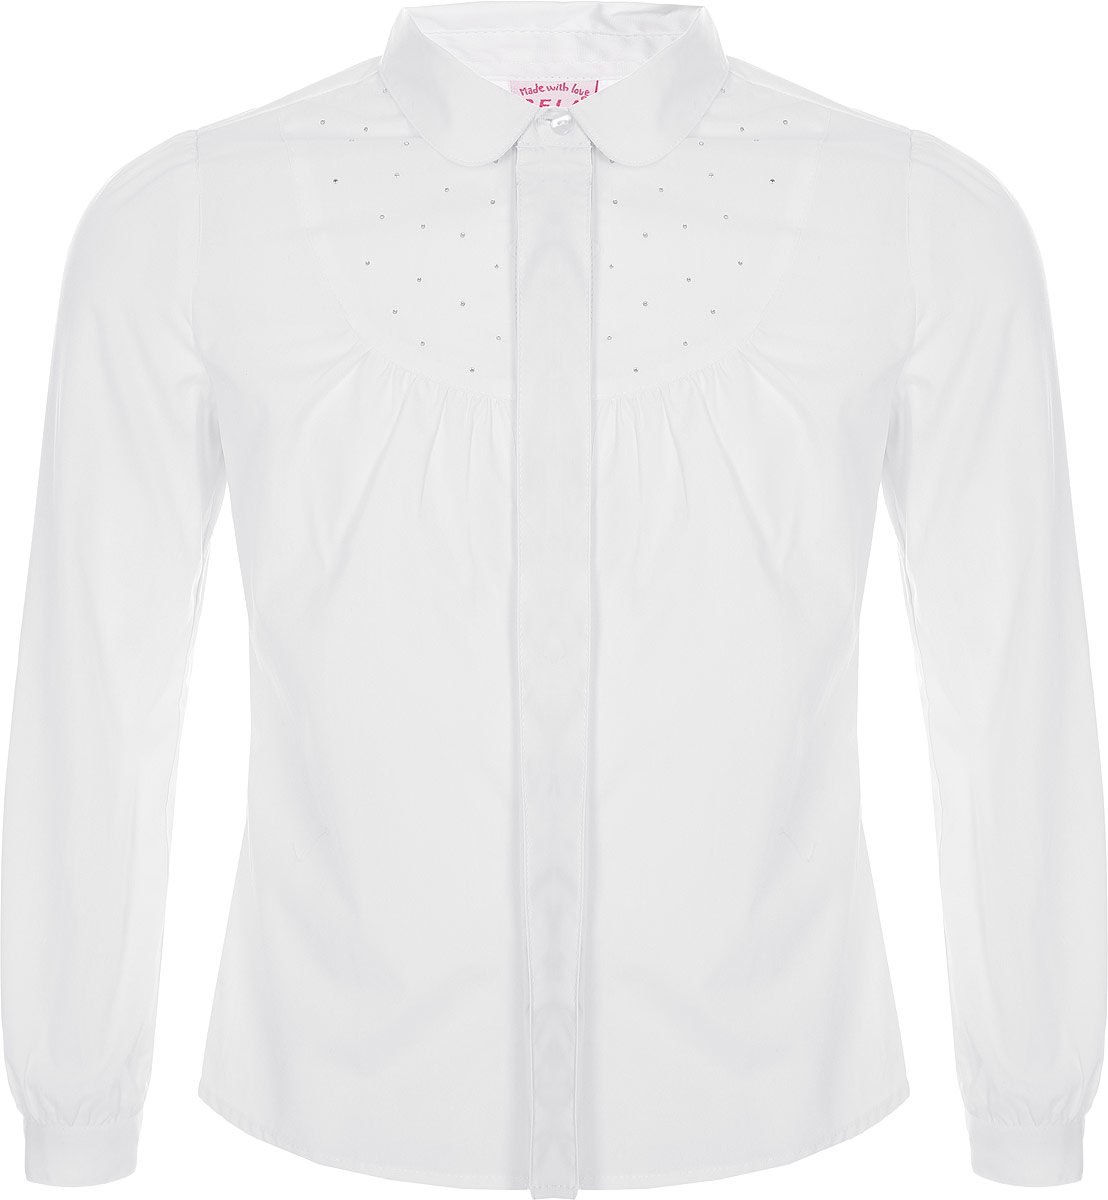 Блузка для девочки Sela, цвет: белый. B-612/1008-8310. Размер 152